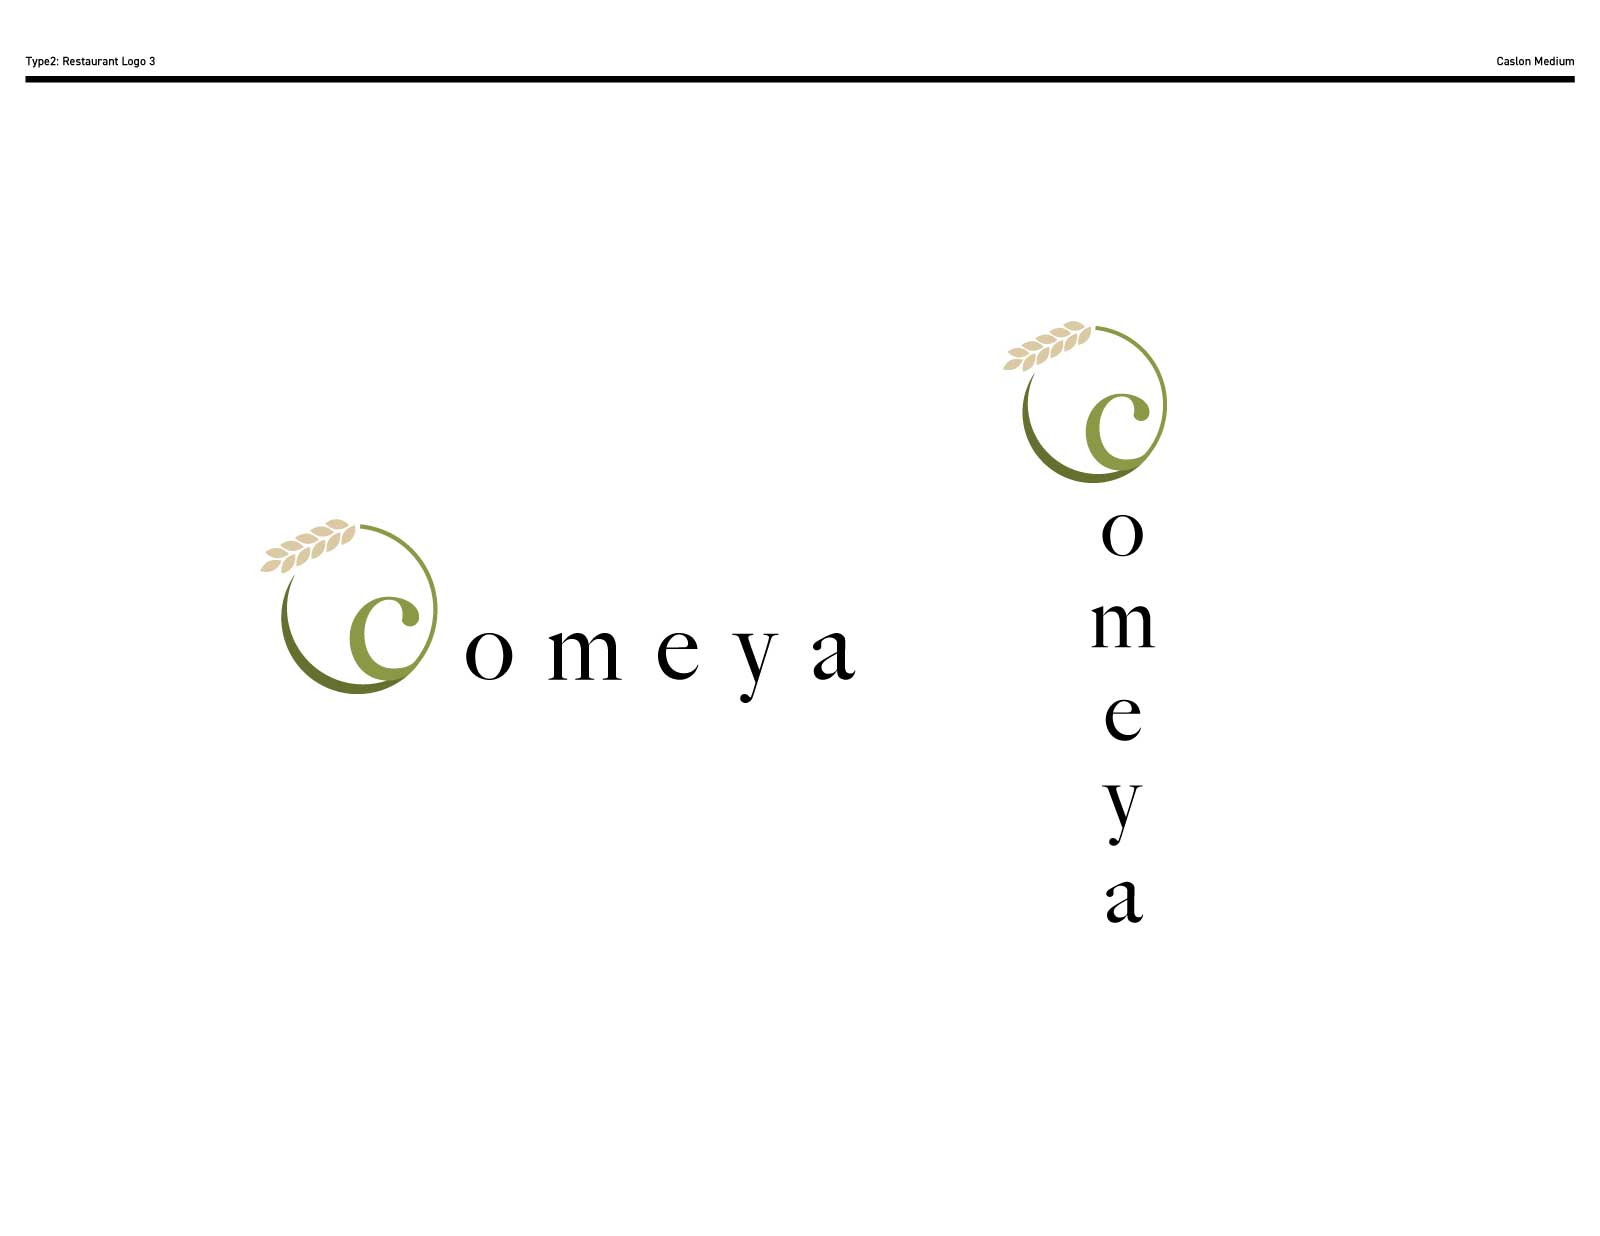 Restaurant Branding: Comeya Logo Ideas